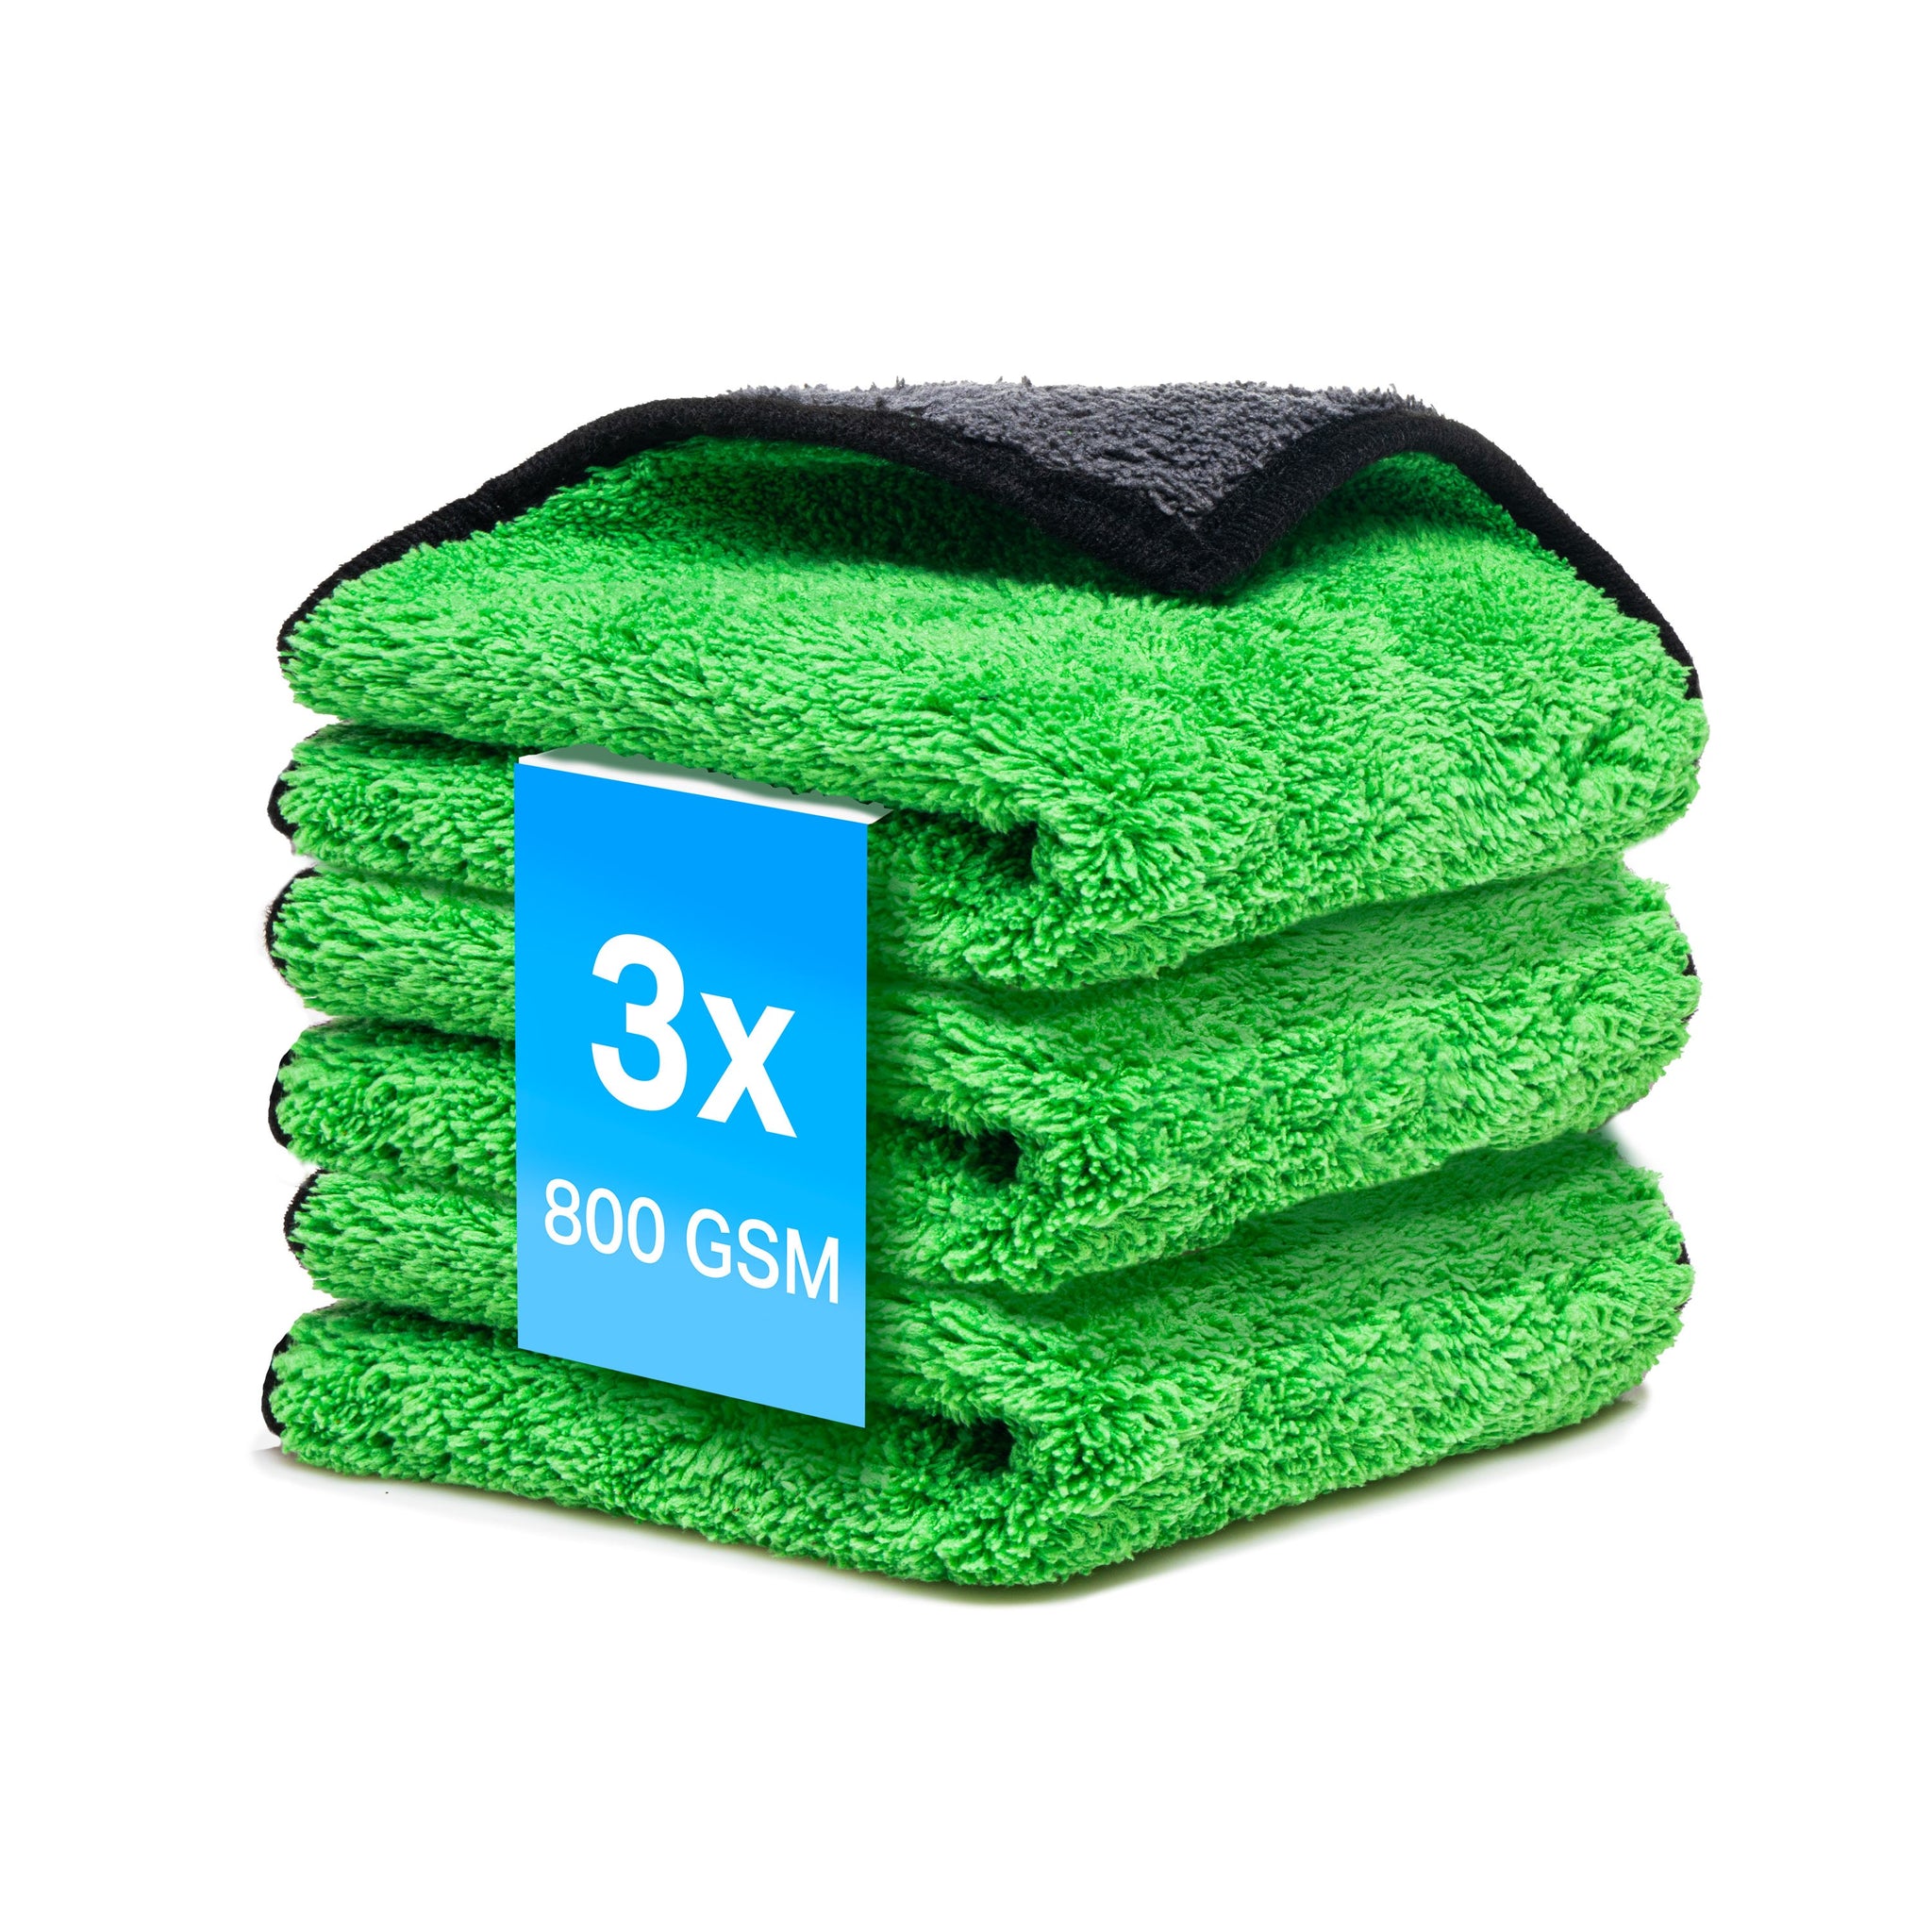 Kemes Mikrofaserhandtuch 800GSM Grün Set 3x Stück grüne Reinigungstücher Poliertuch Microfaser | 30 x30 cm (Grün, 3)